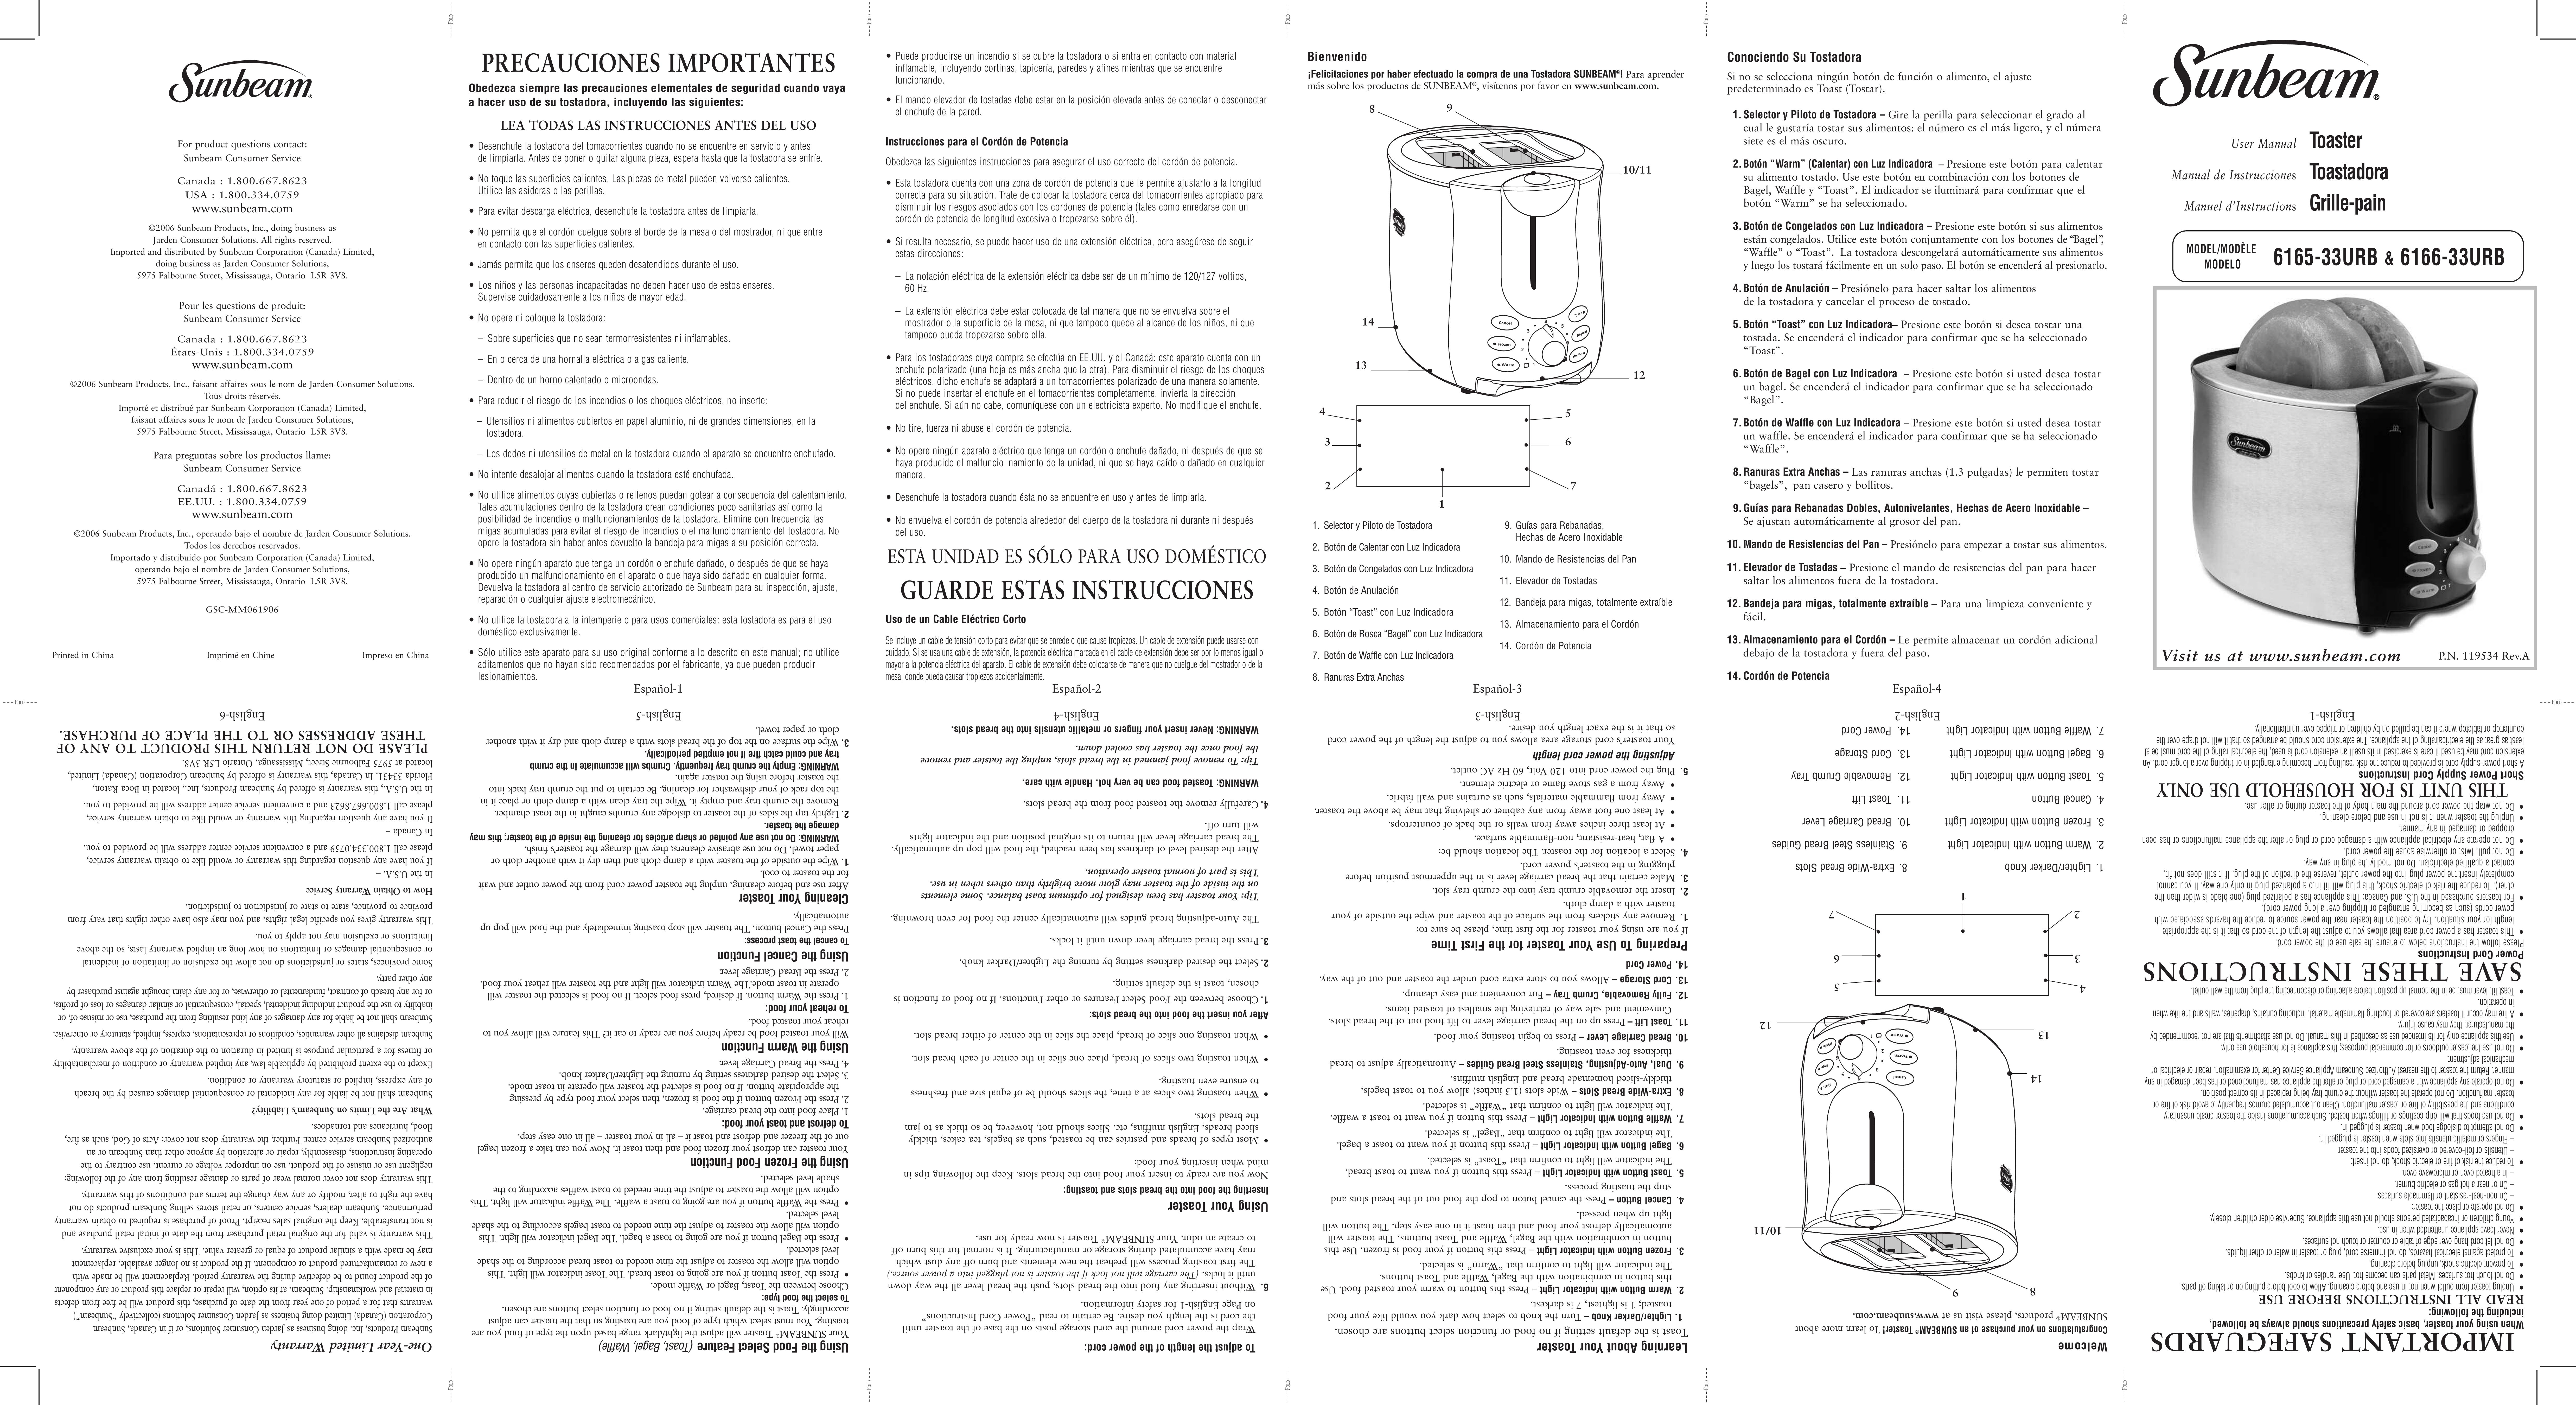 Sunbeam 6165-33 Toaster User Manual